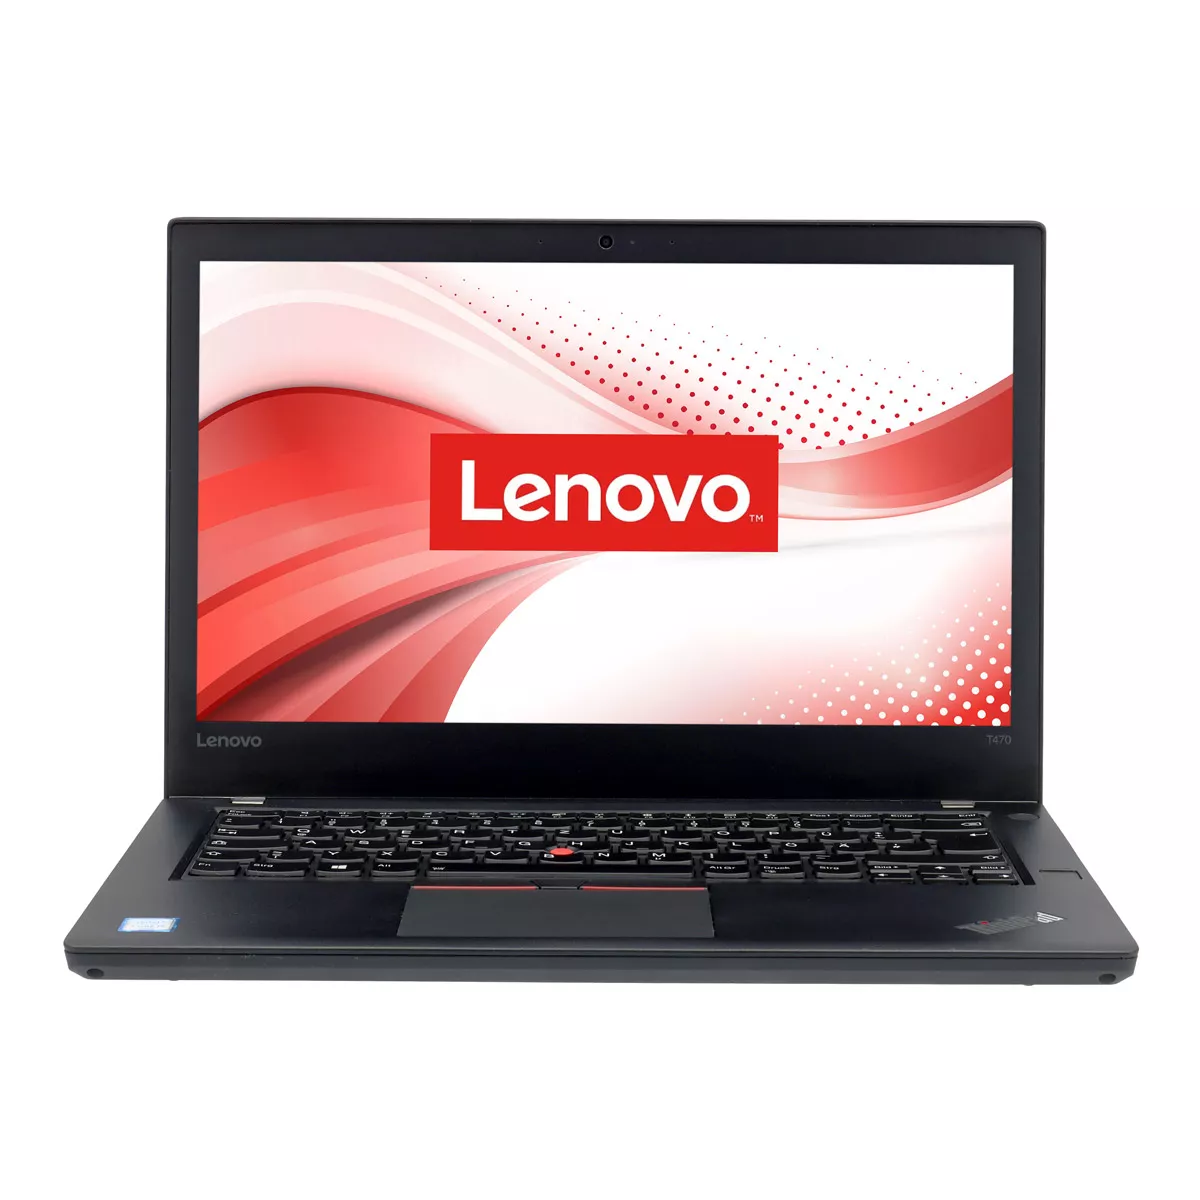 Lenovo ThinkPad T470 Core i5 6300U Full-HD 240 GB m.2 SSD Webcam A+